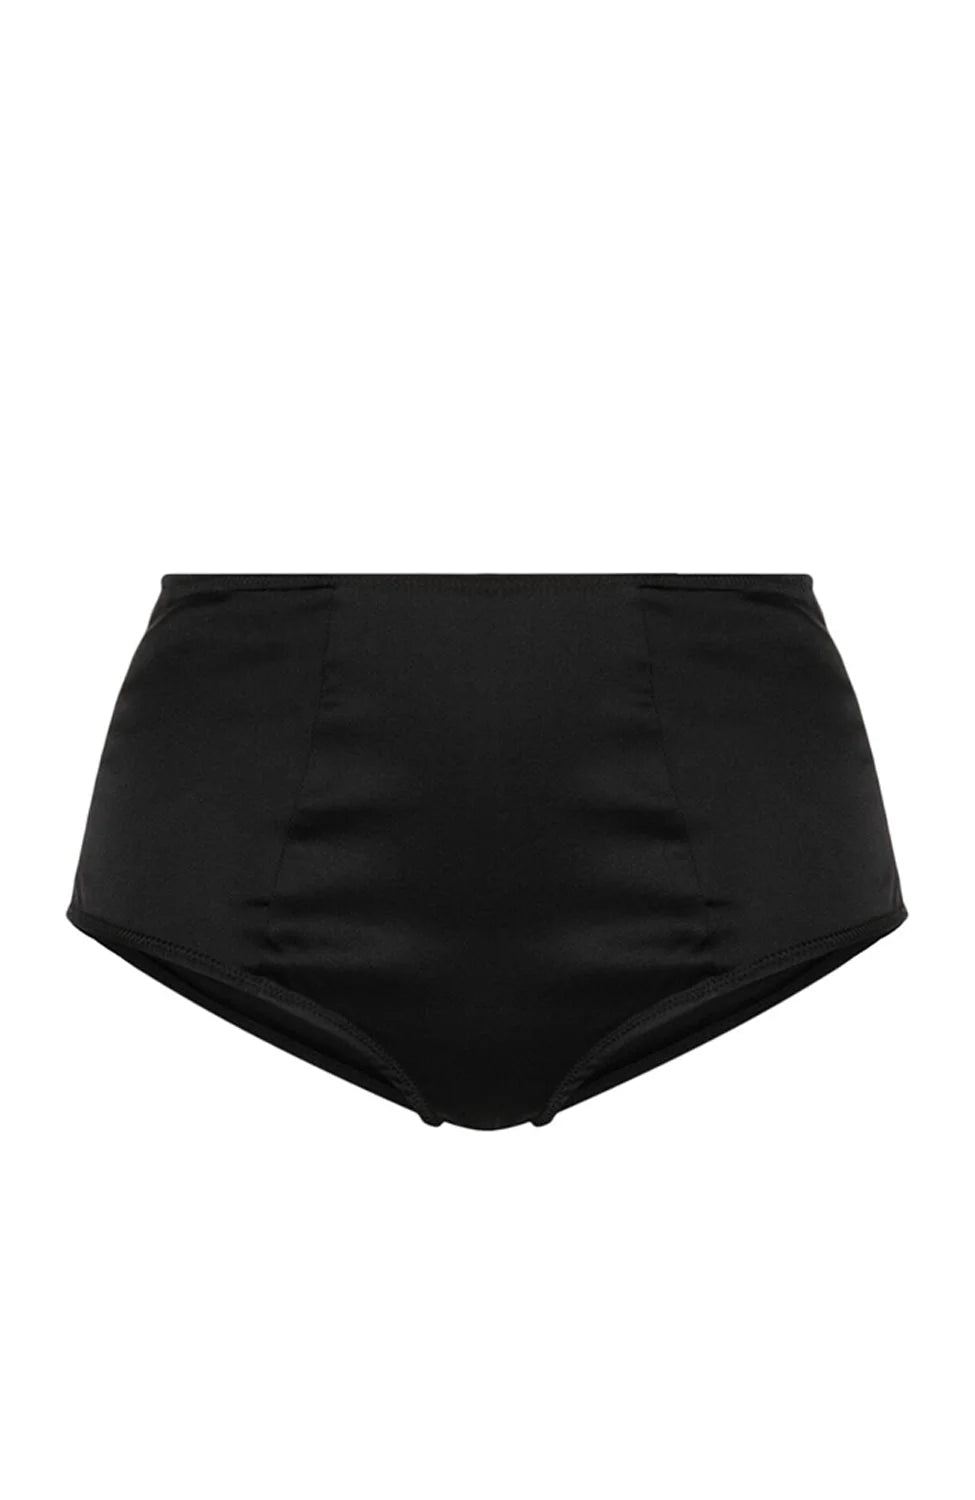 %shop_name_% Kiki de Montparnasse_Tous Les Jours High Waist Panty _ Underwear_ 1130.00